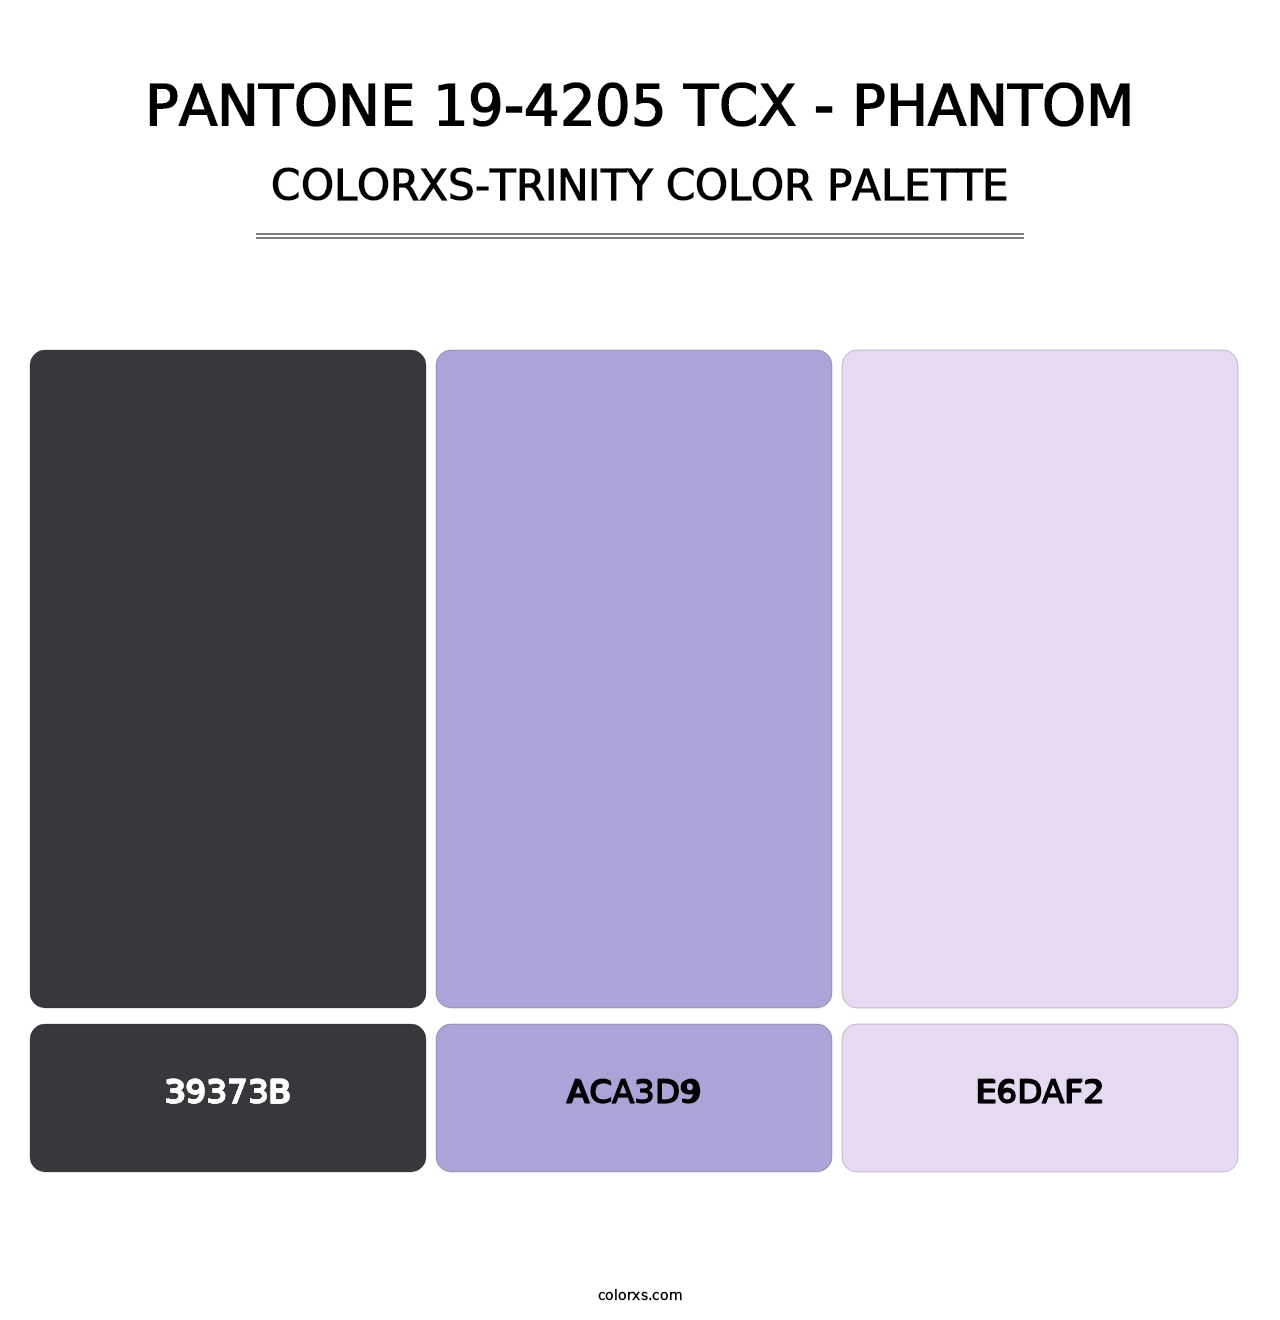 PANTONE 19-4205 TCX - Phantom - Colorxs Trinity Palette